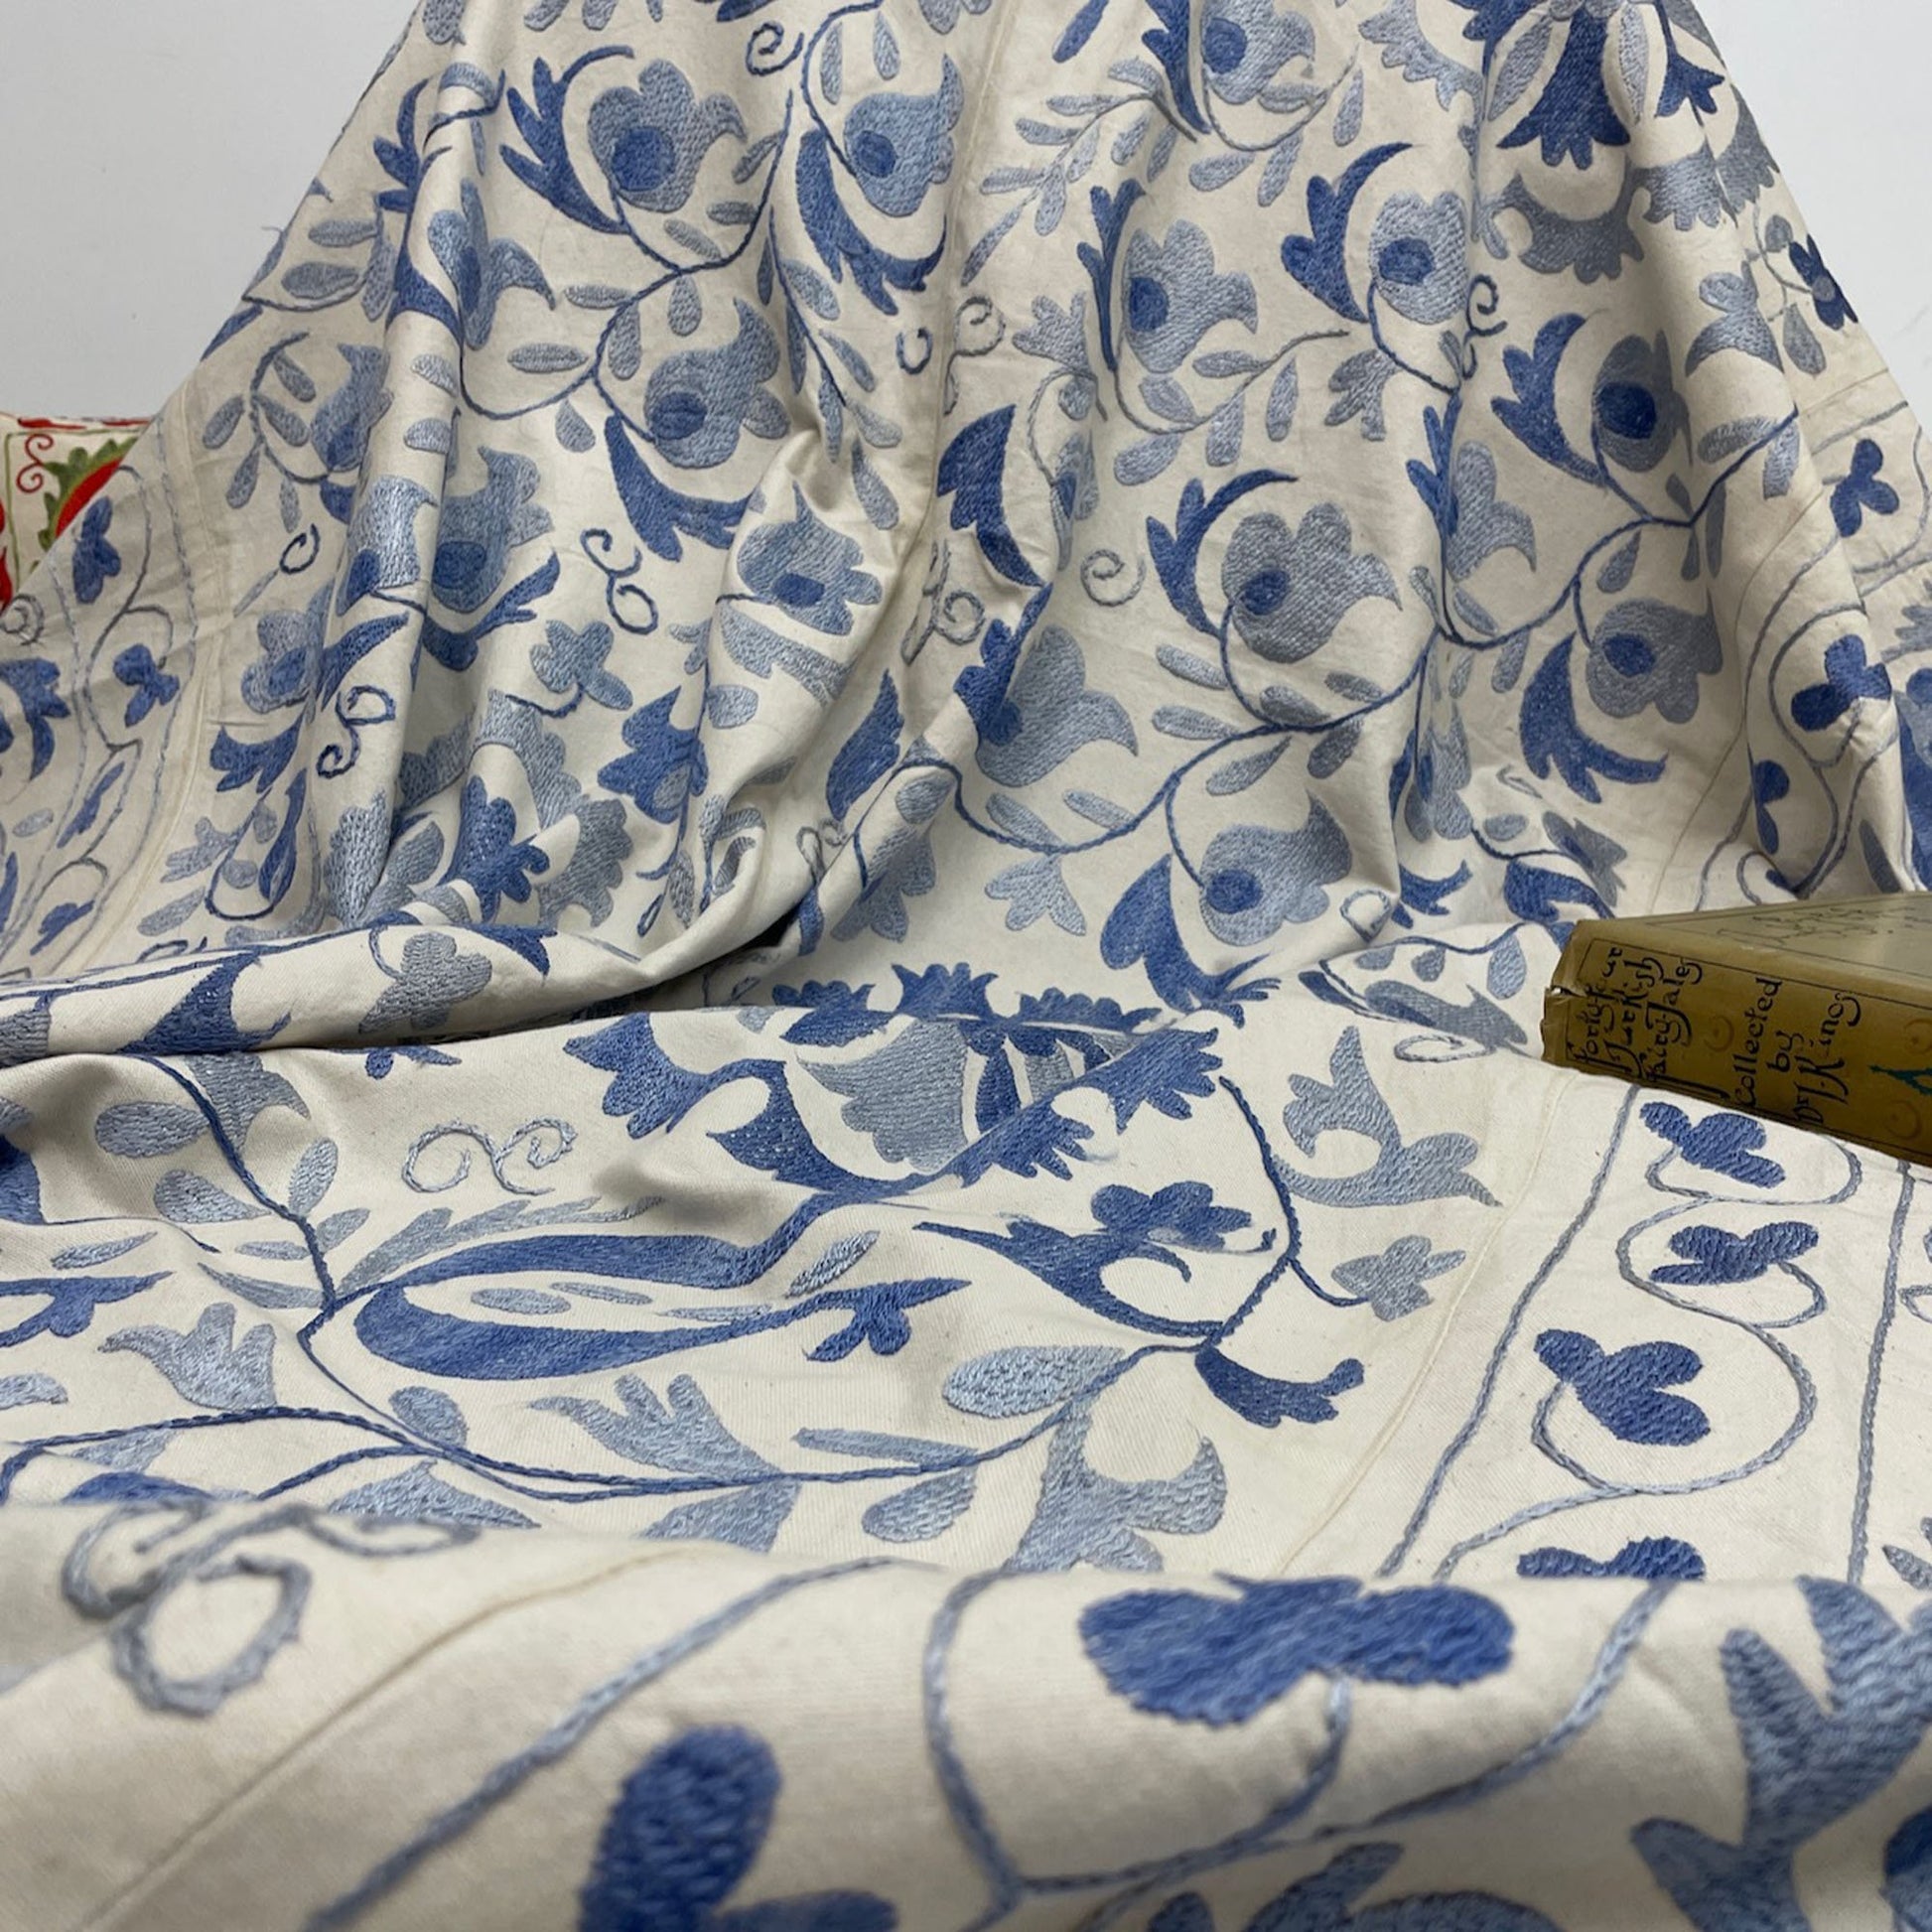 Uzbeki Suzani Hand Embroidered Textile Wall Hanging | Home Décor | Throw | XL 190cm x 250cm SUZ1205002 - Wildash London